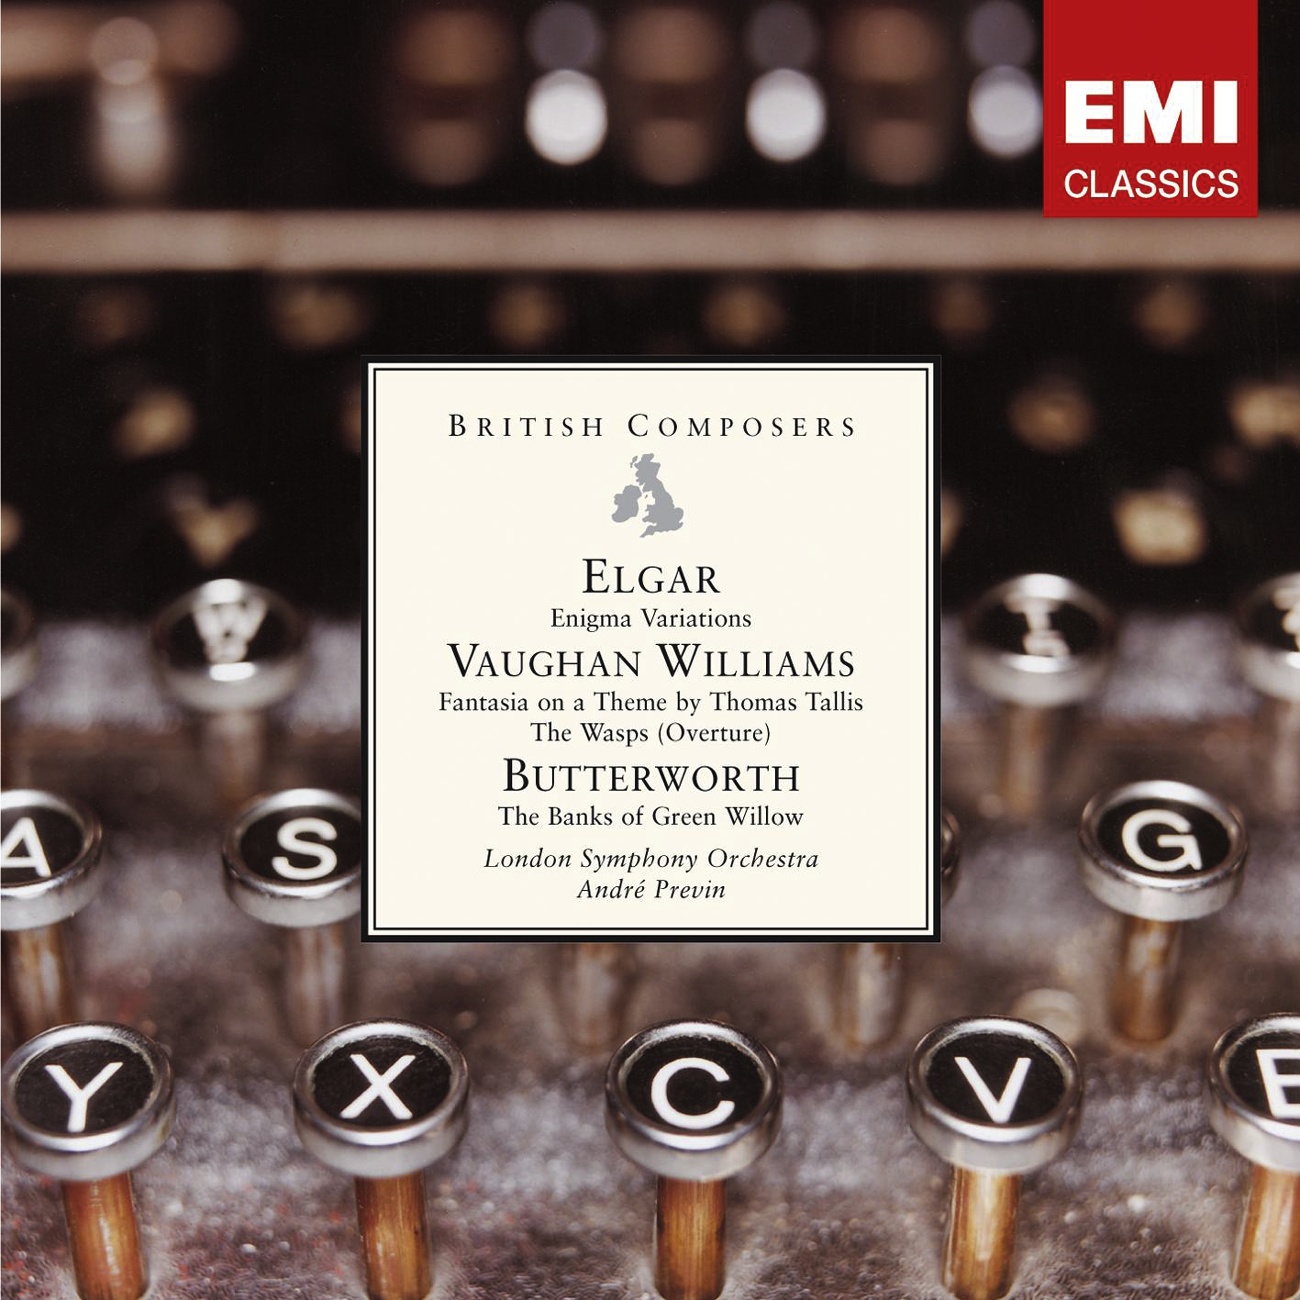 Variations on an Original Theme 'Enigma' Op. 36 (2007 Digital Remaster): XIII.   Romanza: * * *  [Lady Mary Lygon] (Moderato)